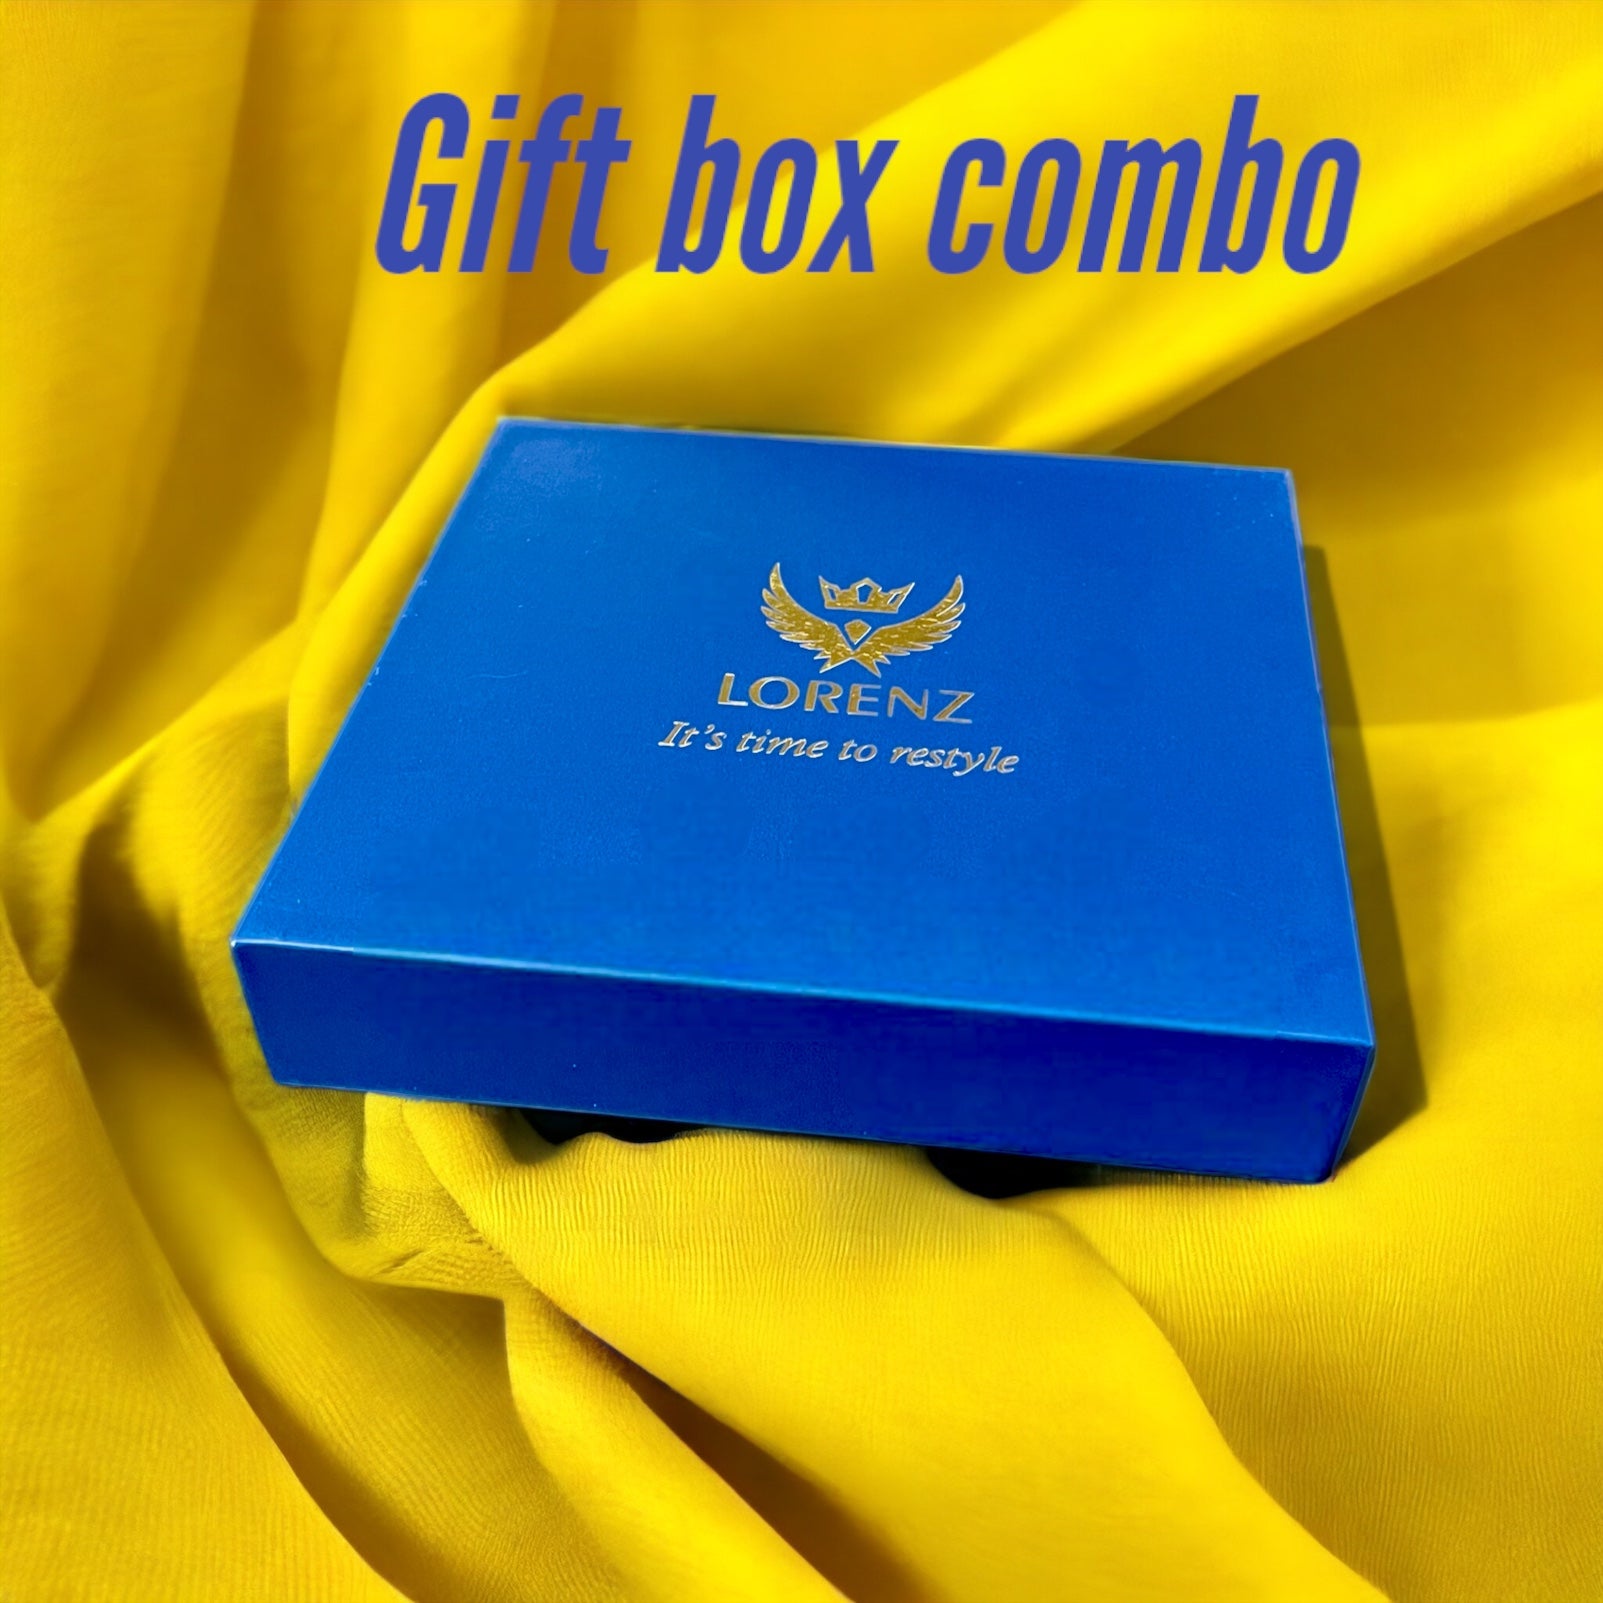 Gifts Box Combo